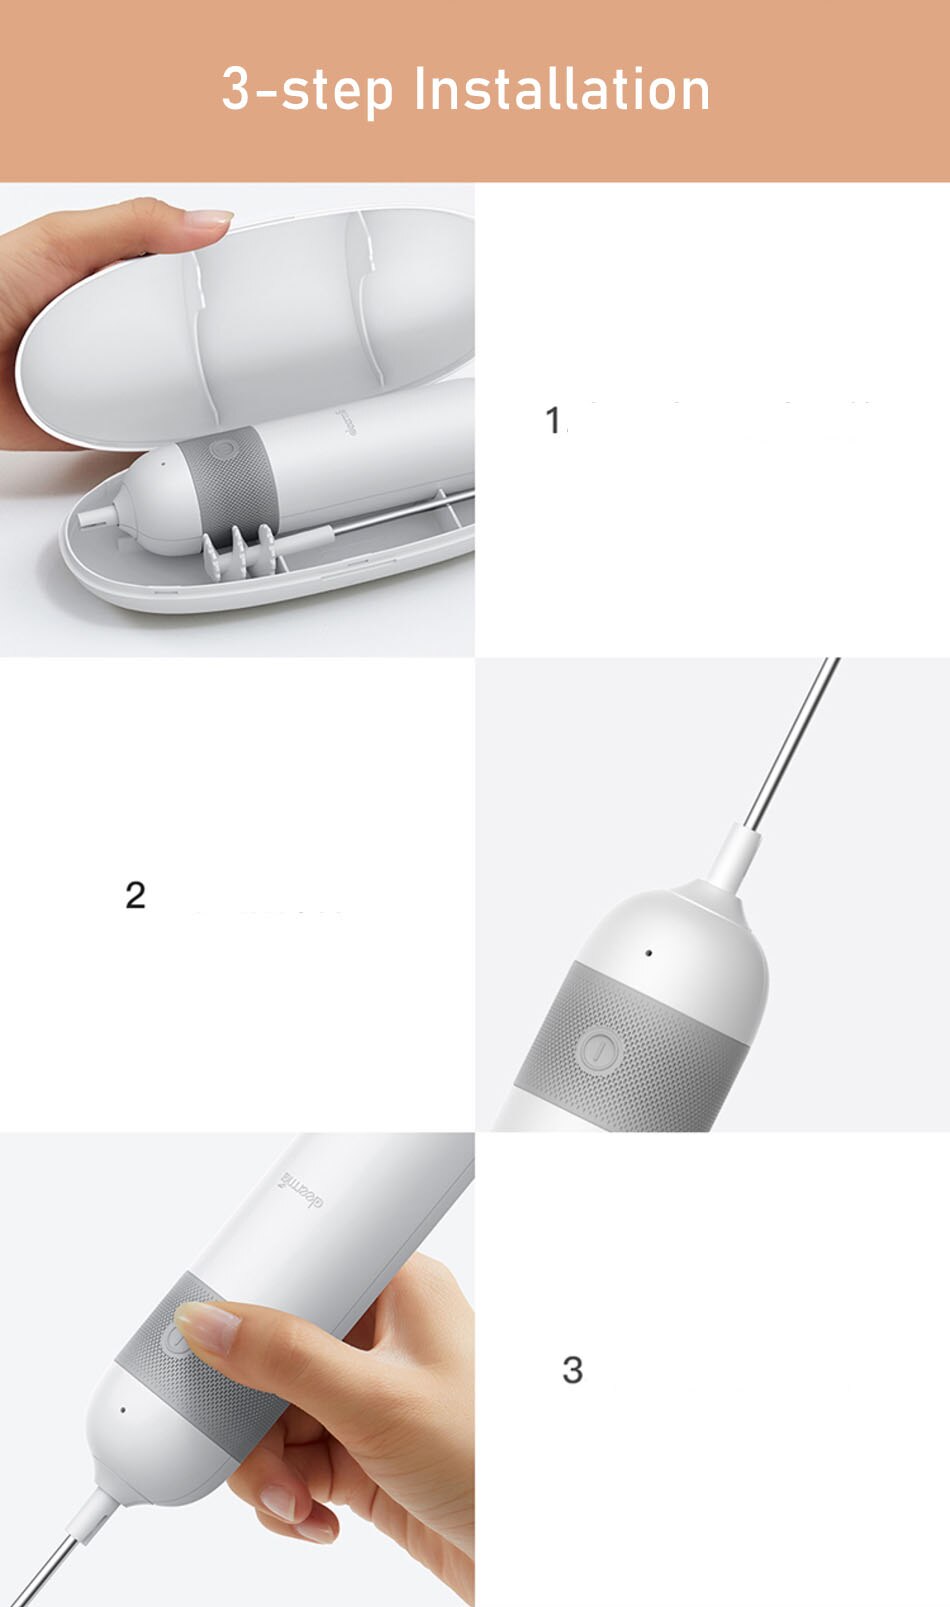 2021 Deerma Electric Milk Frother Handheld Foamer Egg Beater Coffee Mixer USB Rechargeable Stirrer 11000rpm Portable Blender